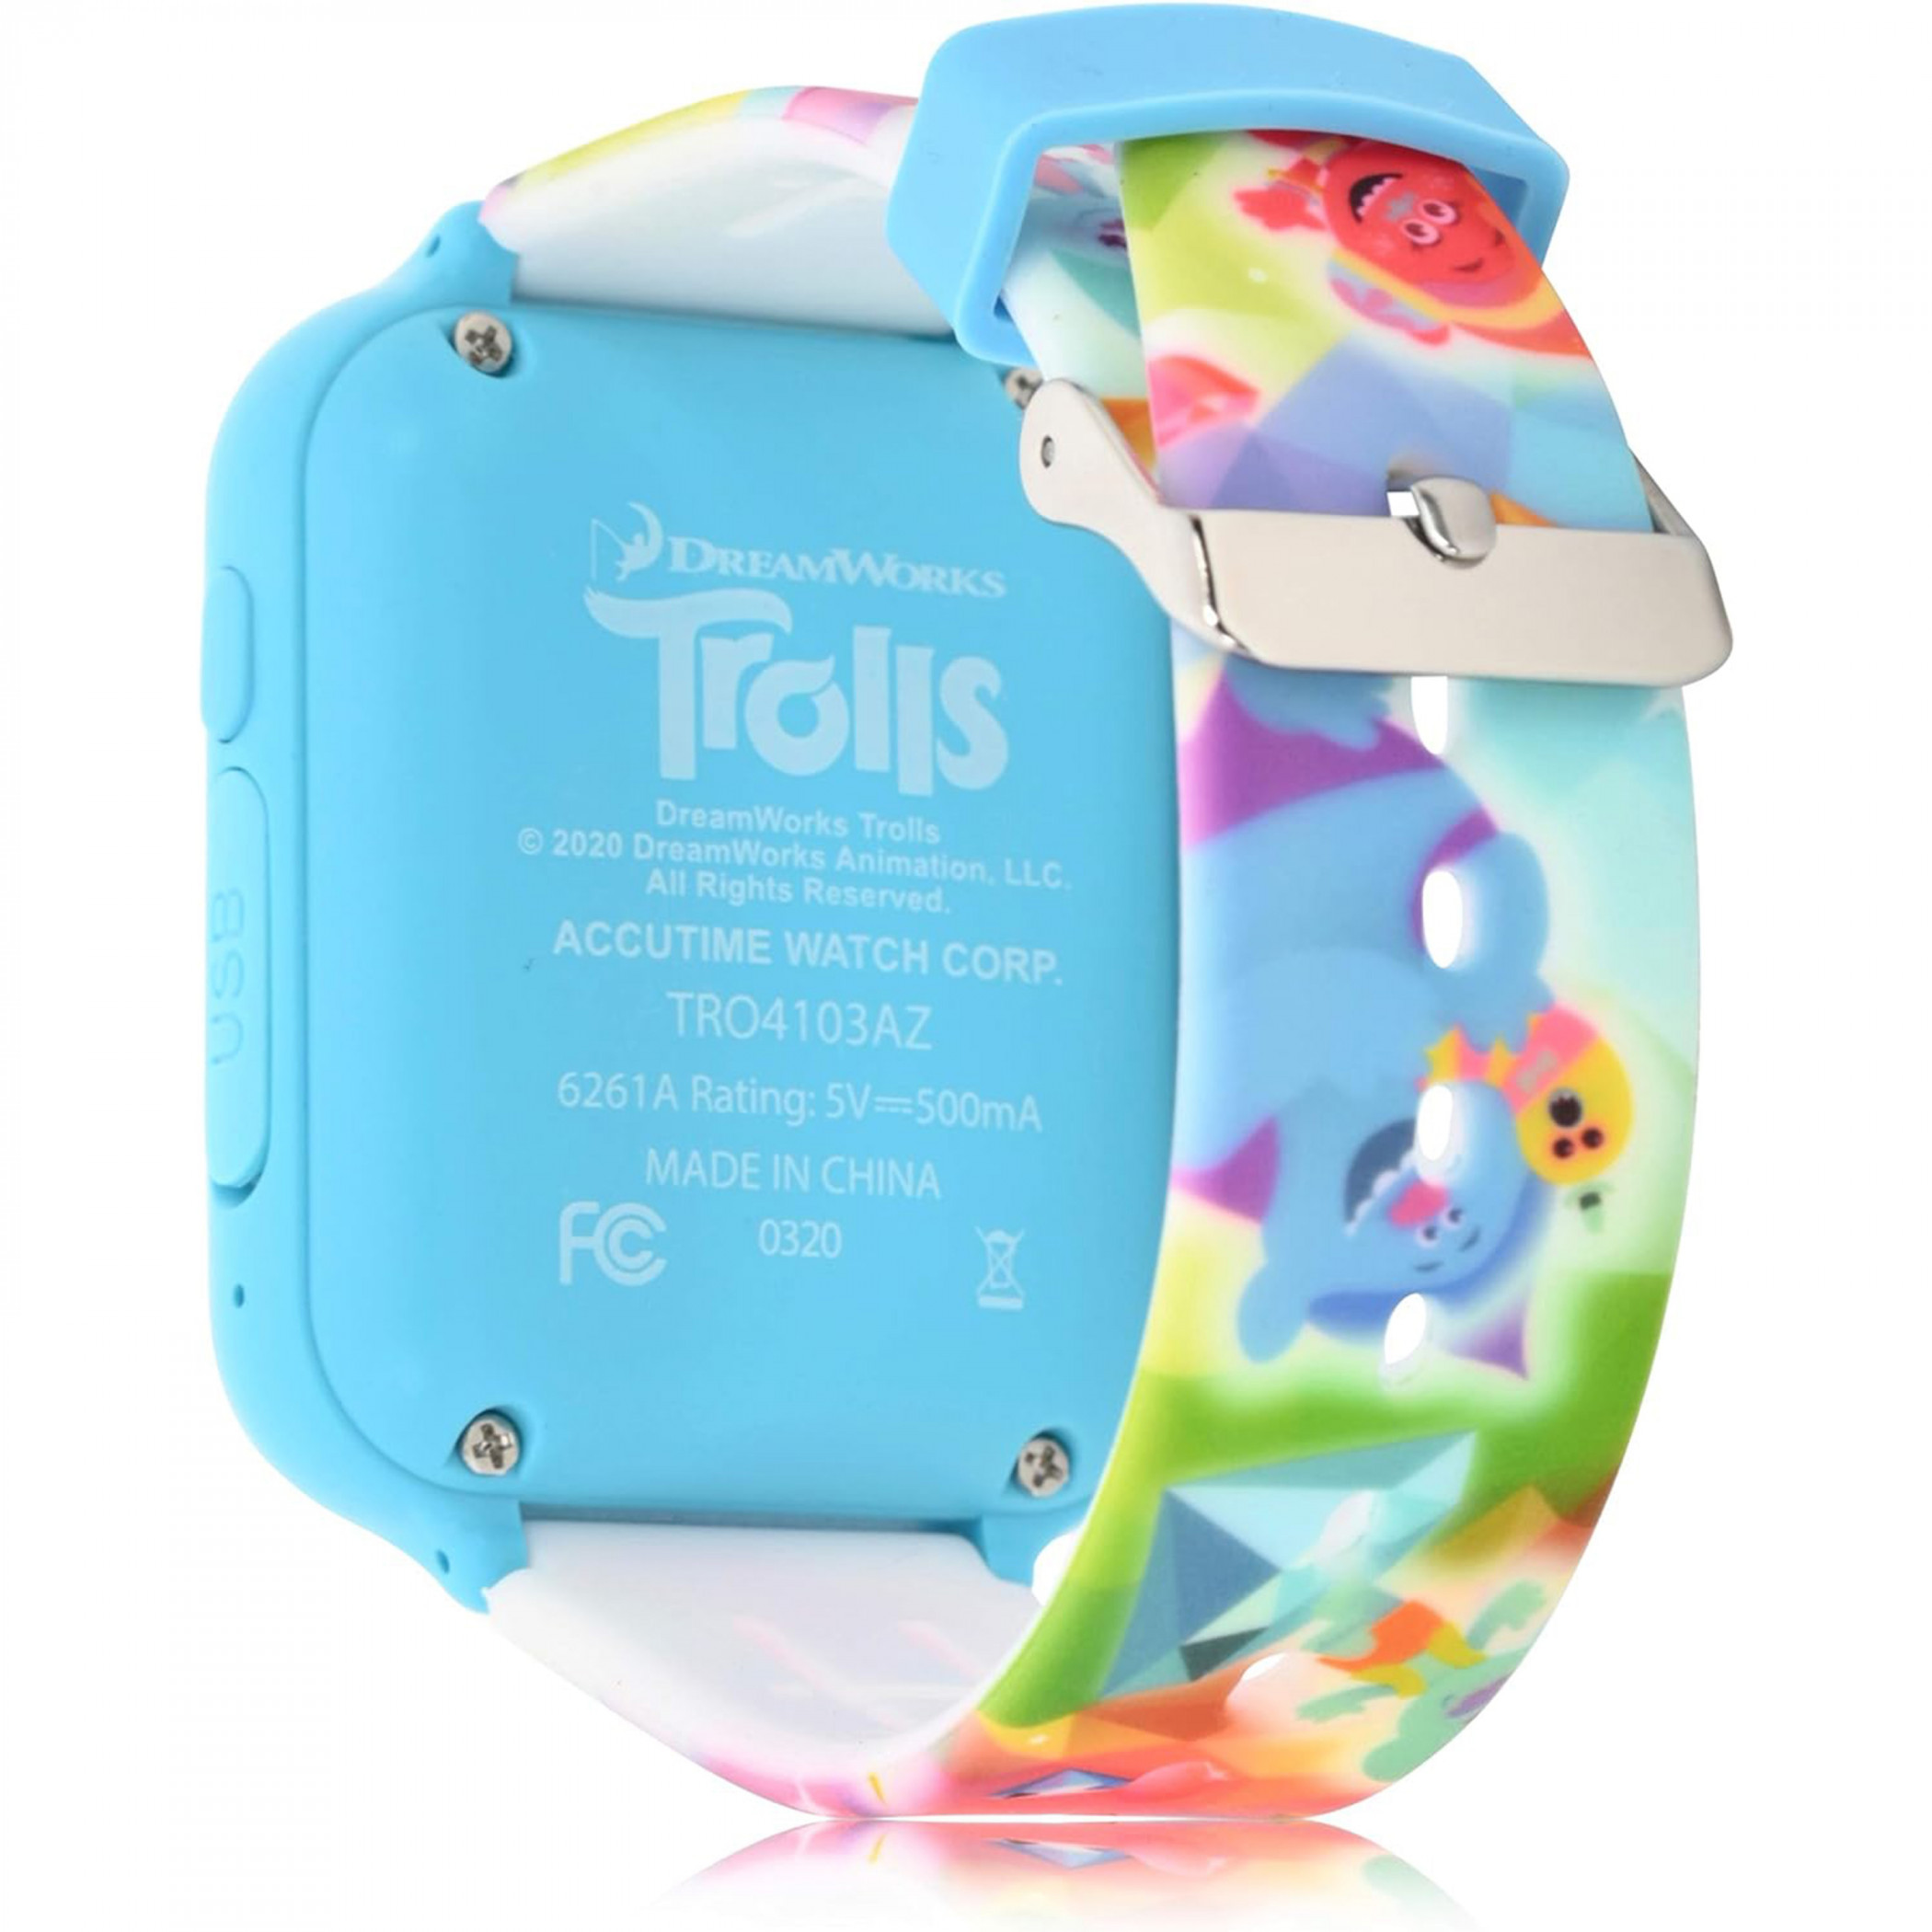 Trolls Full Rainbow Interactive Square Digital Kids Watch